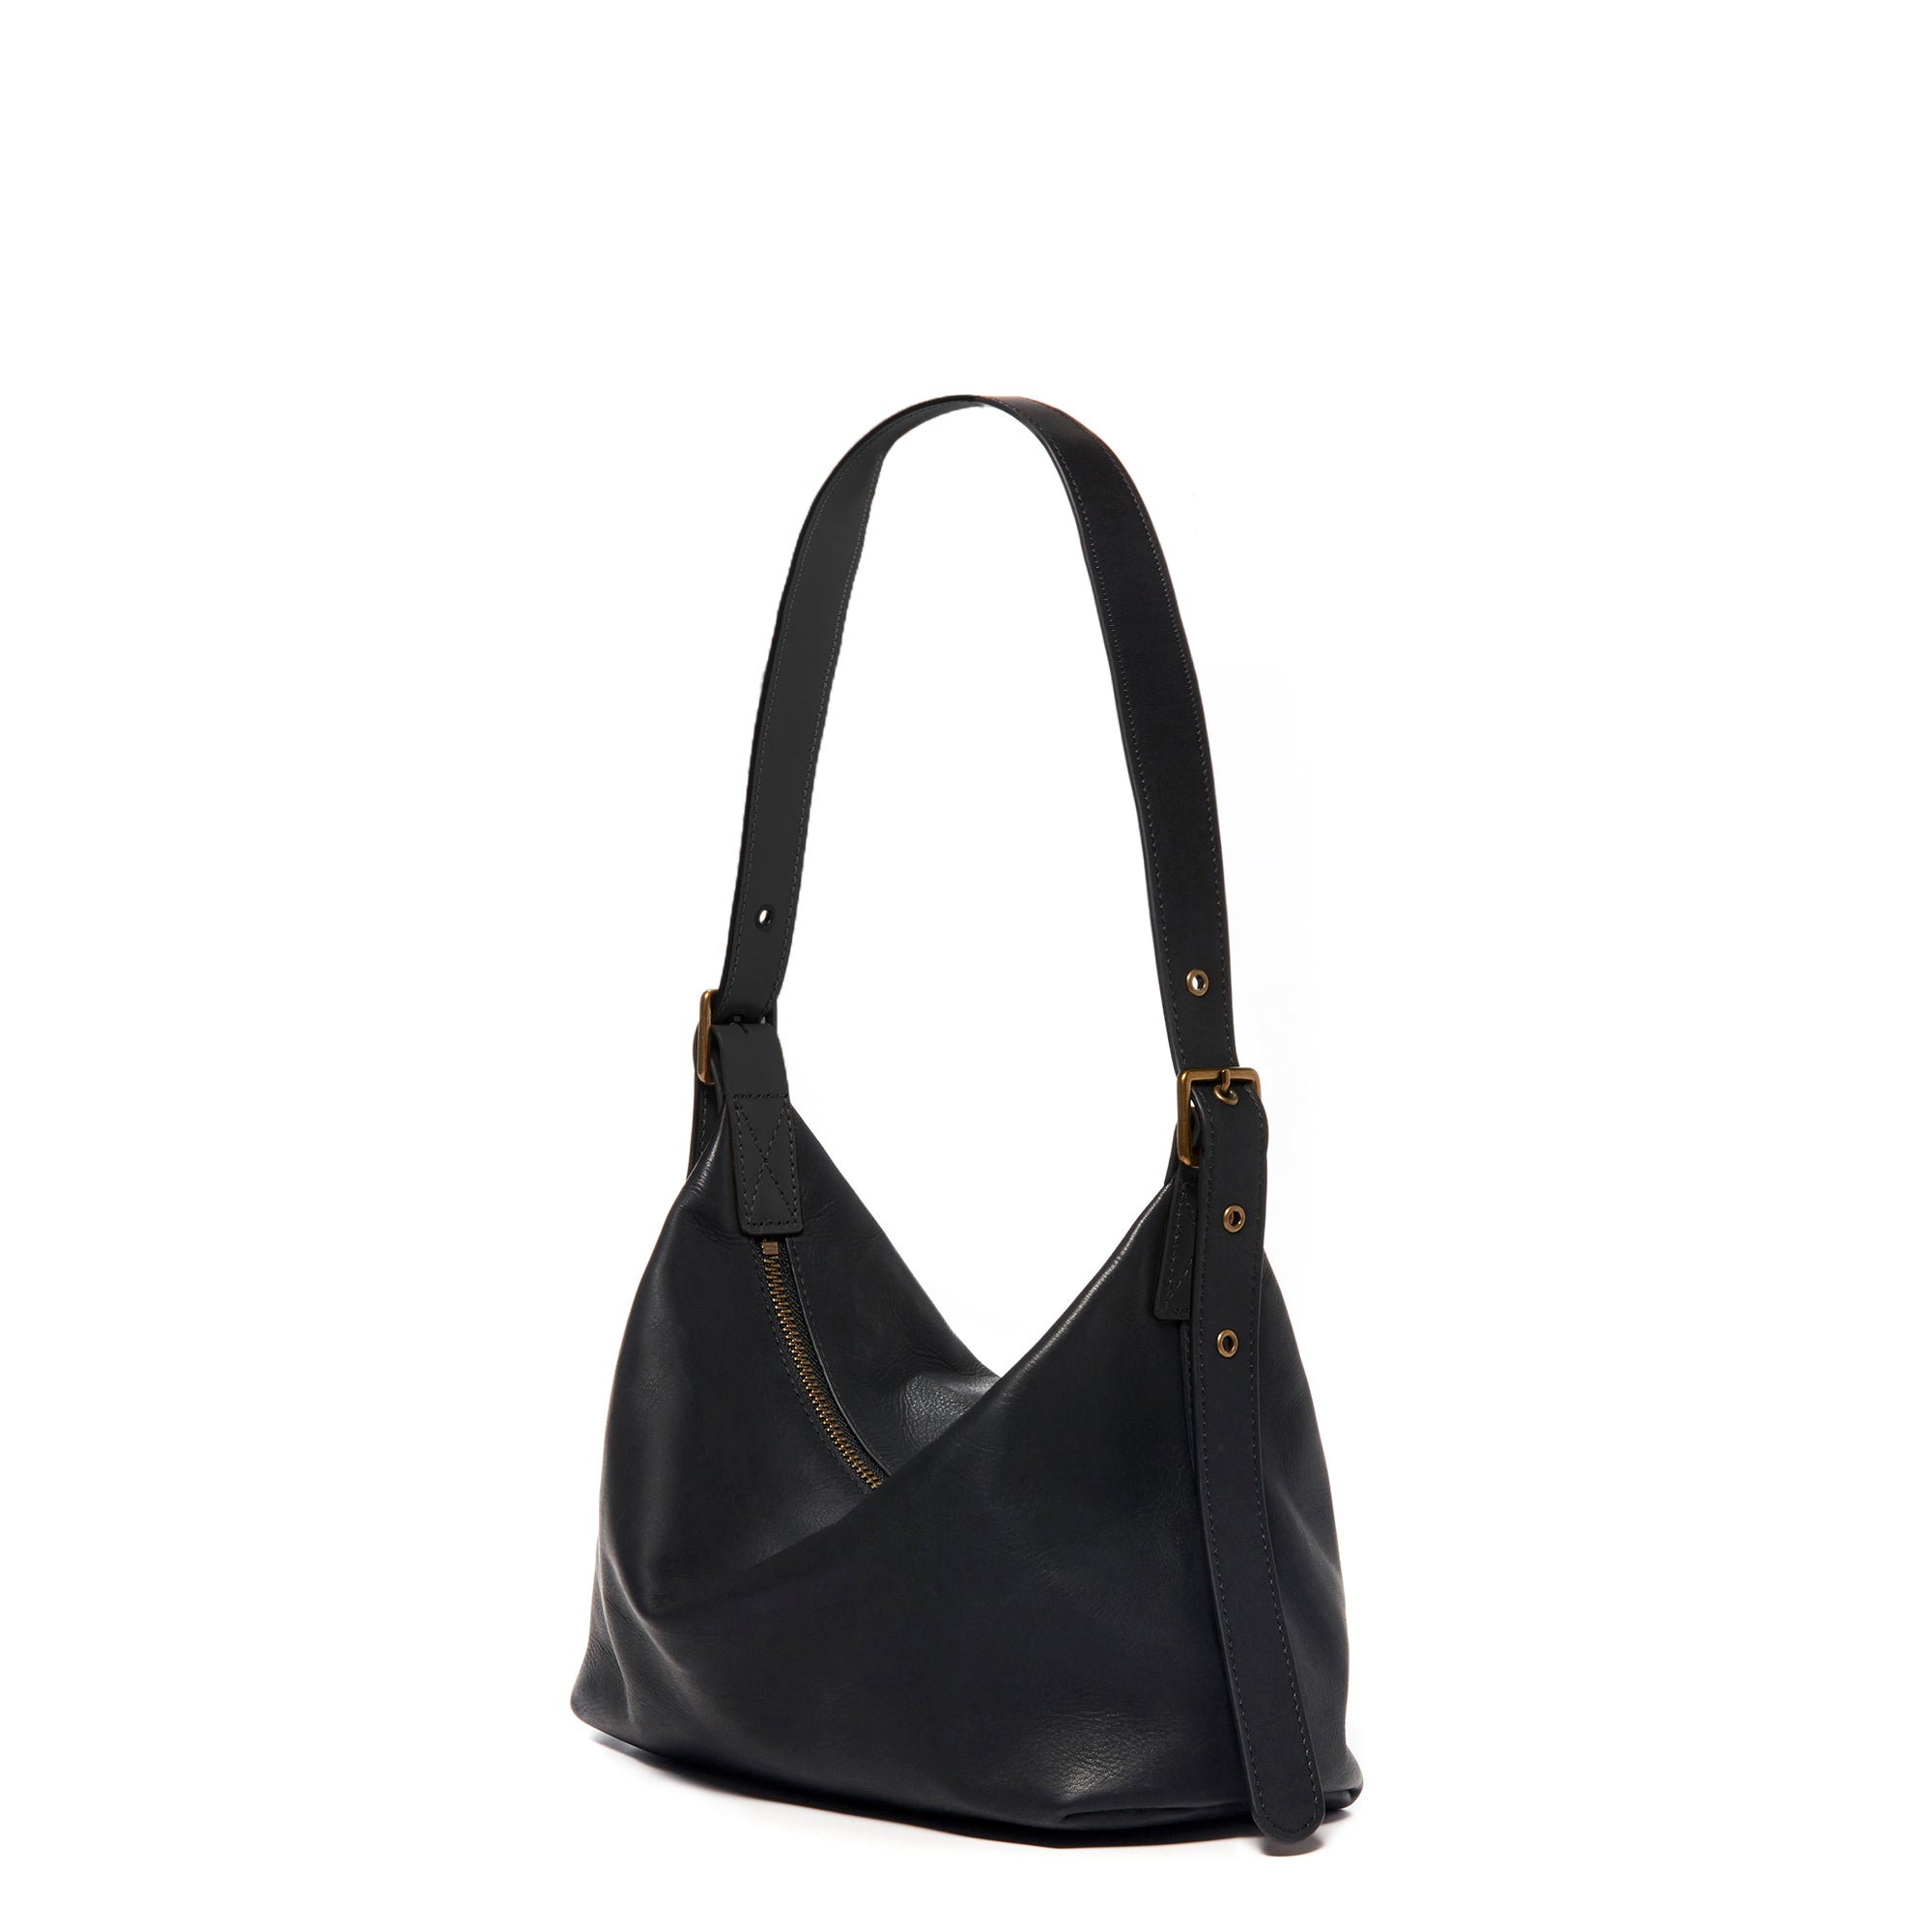 Ava black leather mini crossbody bag